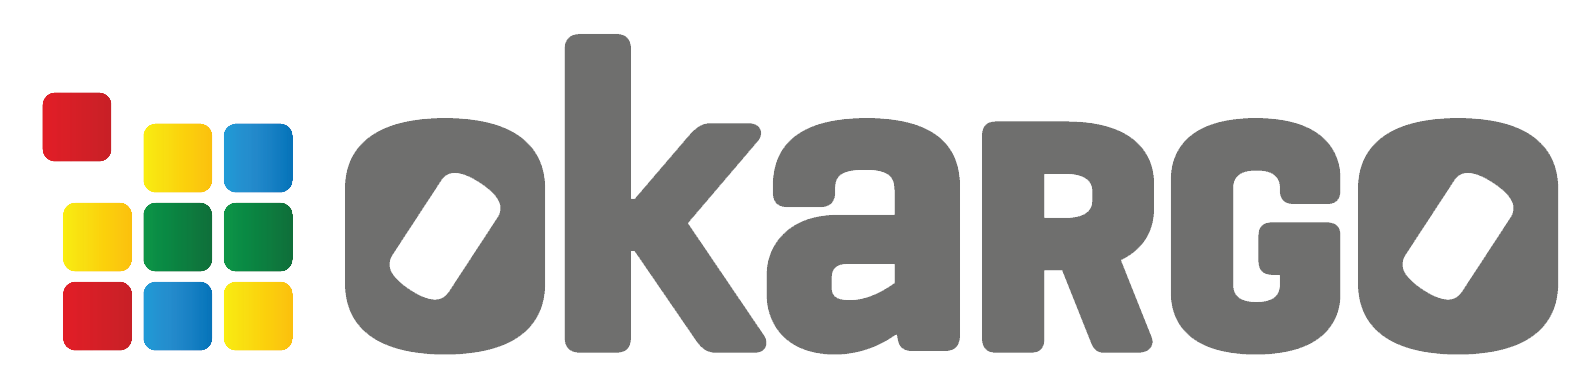 https://agm.oceanx.network/wp-content/uploads/2021/10/Okargo-logo.png